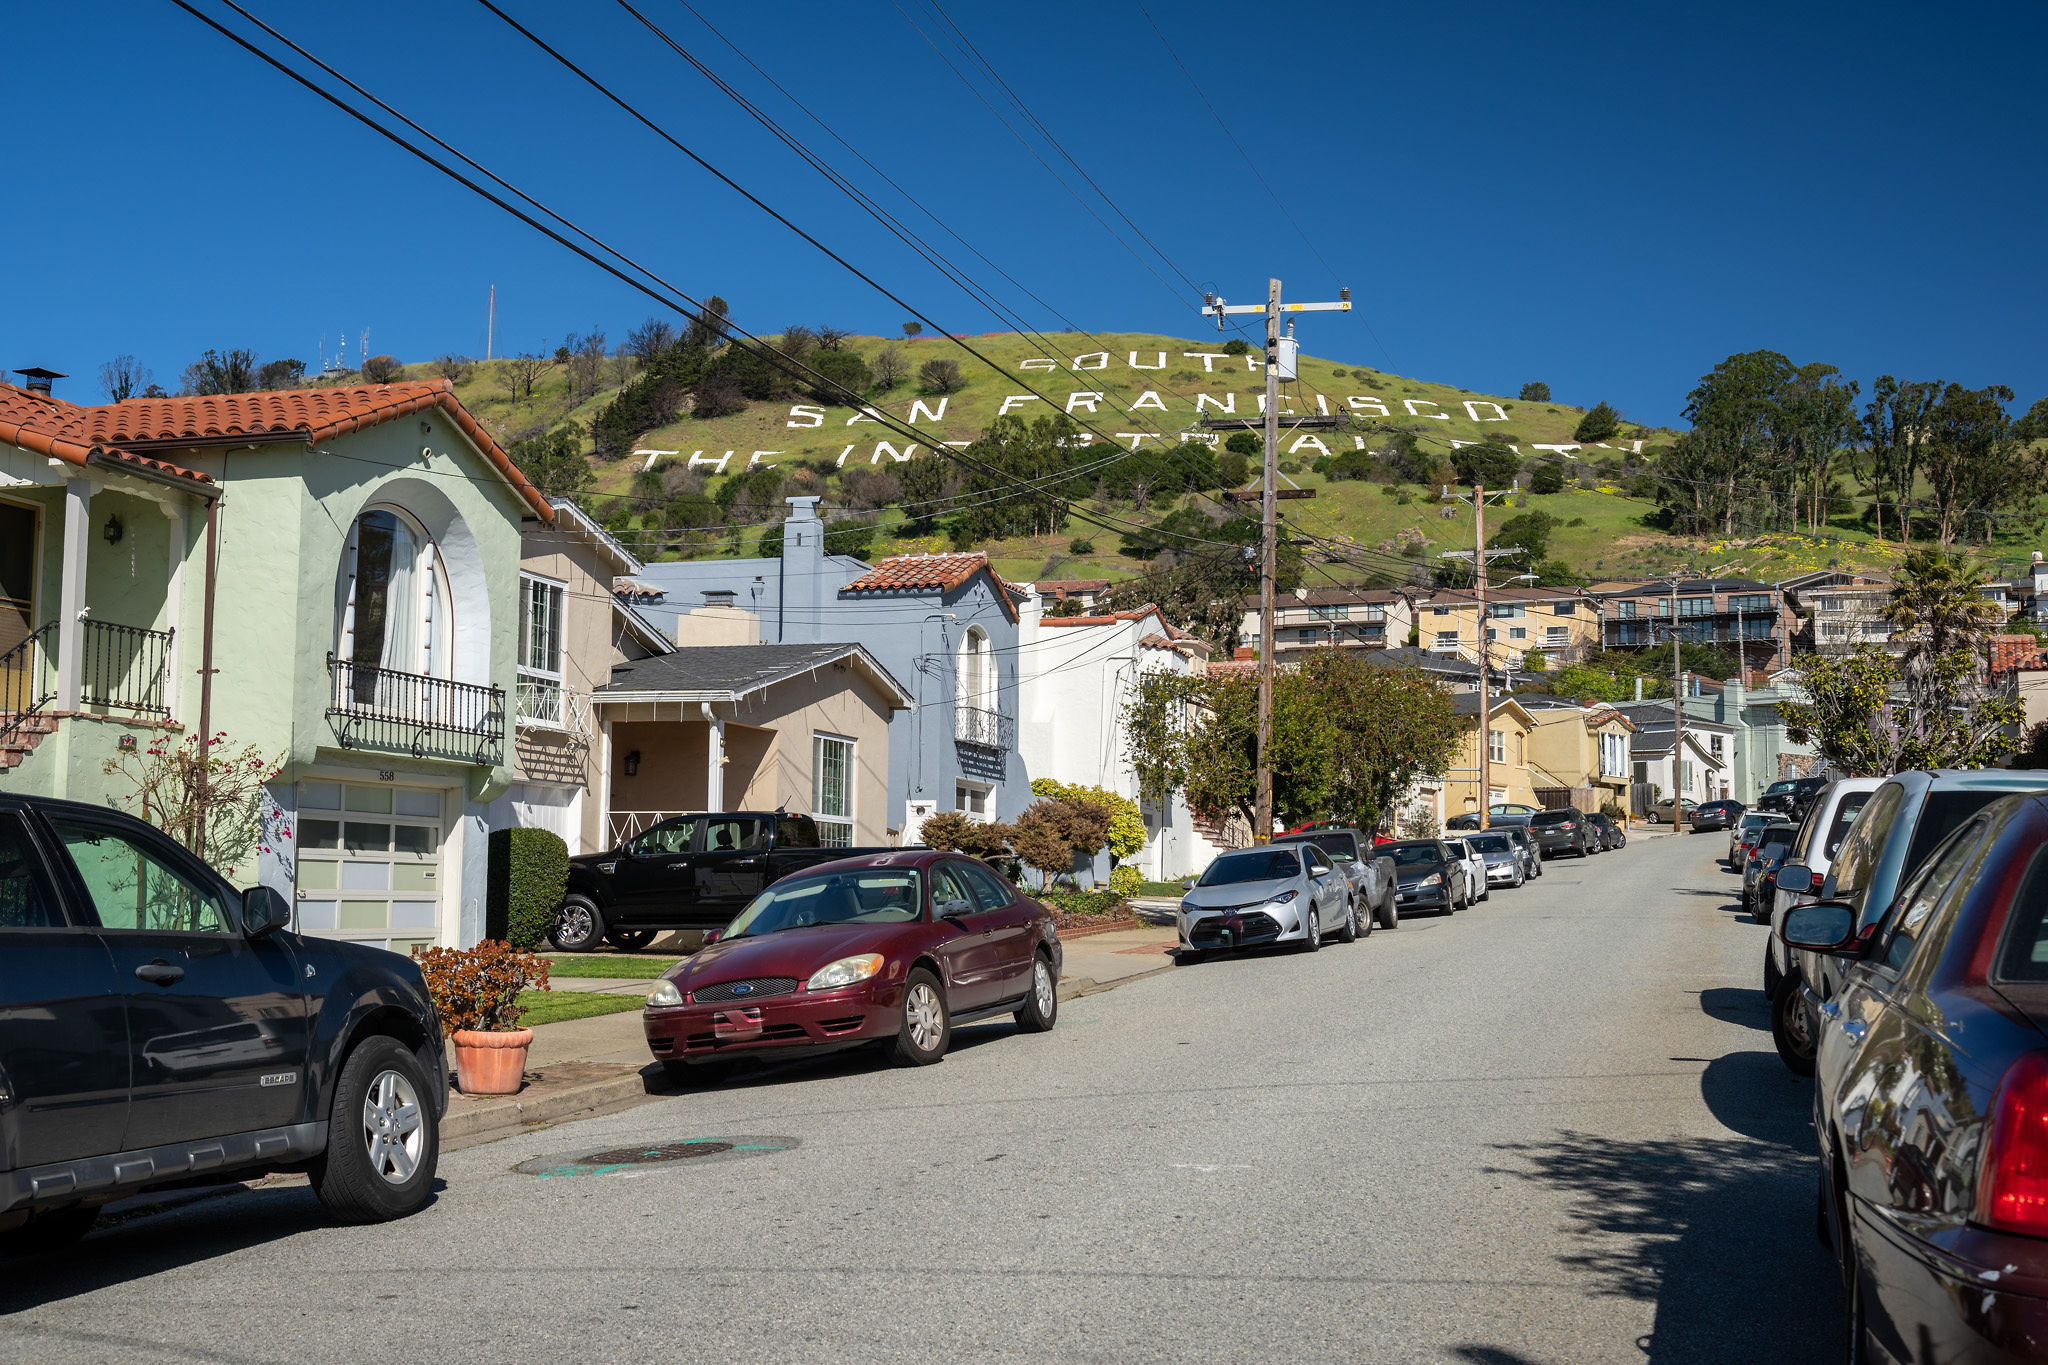 South San Francisco sign hill.